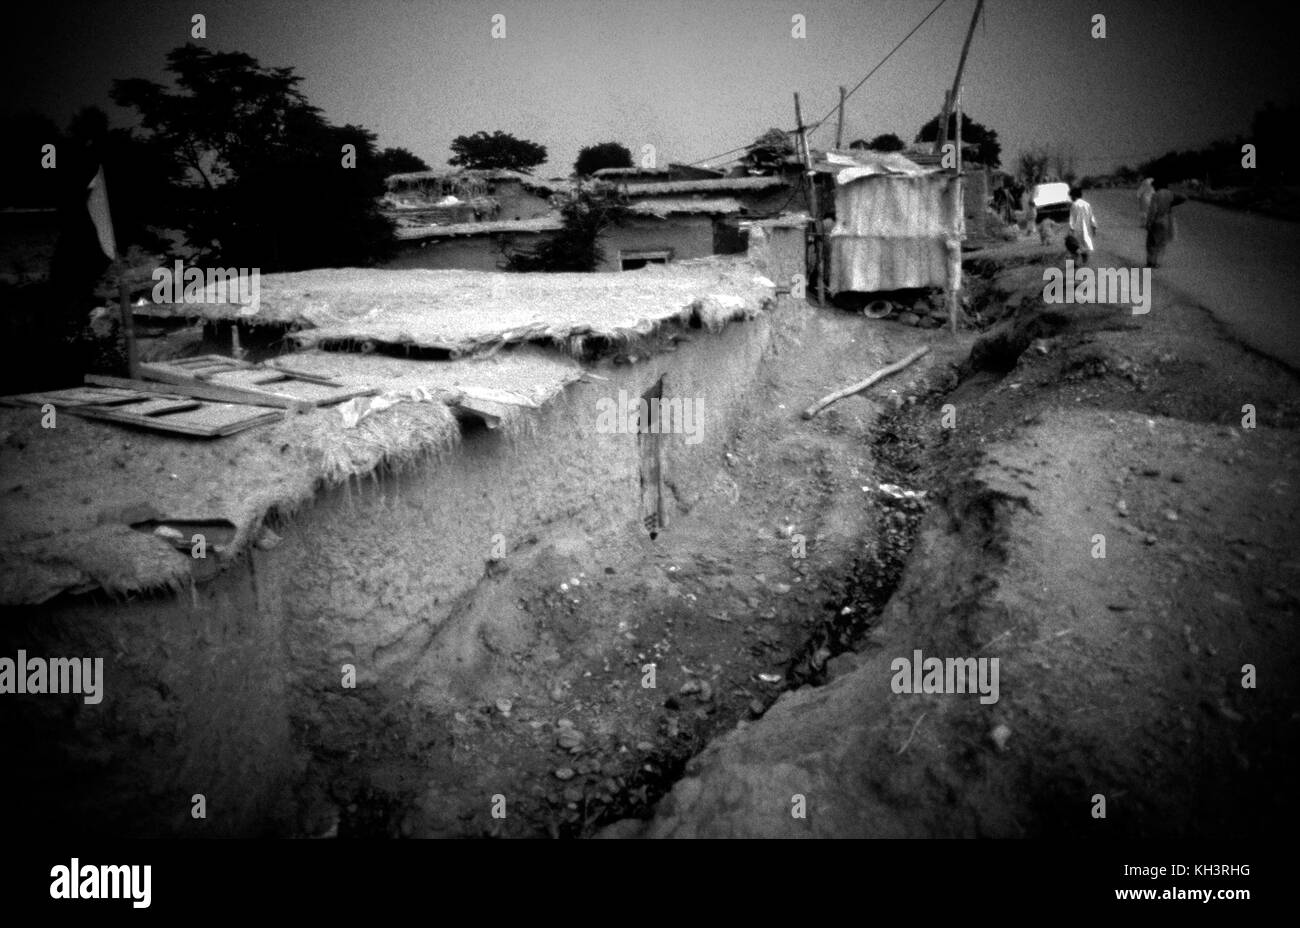 Mud houses seen in the fruit market refugee camp in Rawalpindi, Pakistan. Date: 8/2000. Photographer: Xabier Mikel Laburu Stock Photo